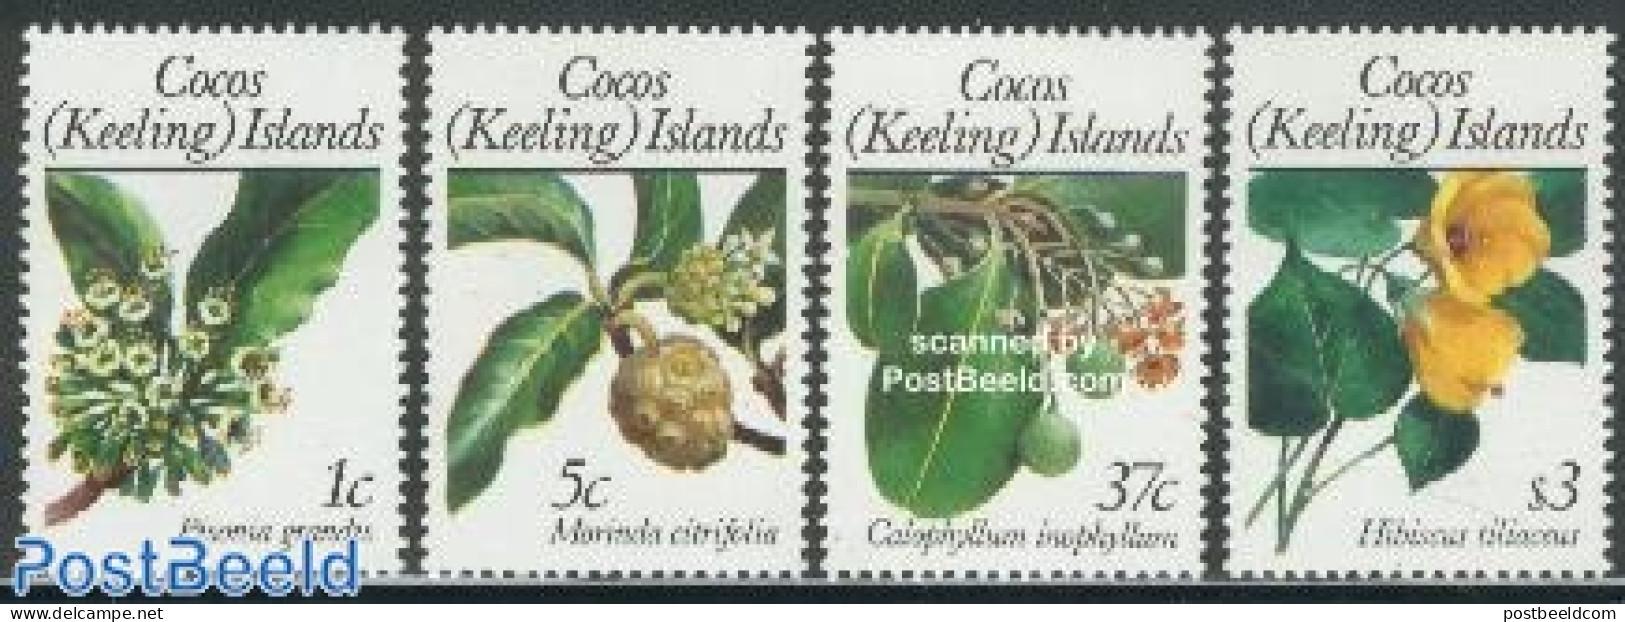 Cocos Islands 1988 Flowers 4v, Mint NH, Nature - Flowers & Plants - Cocoseilanden